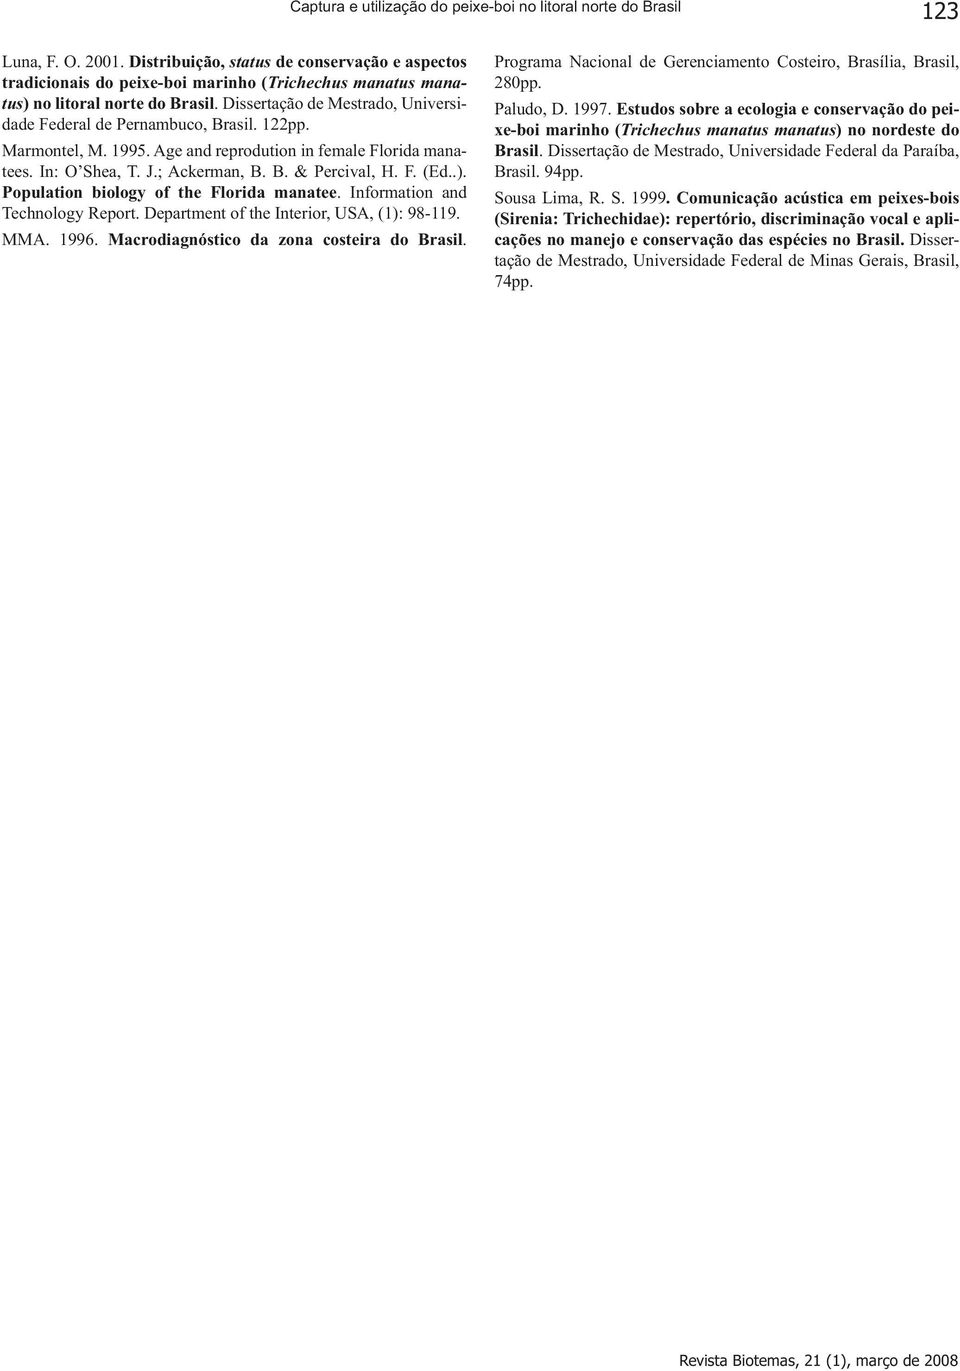 Dissertação de Mestrado, Universidade Federal de Pernambuco, Brasil. 122pp. Marmontel, M. 1995. Age and reprodution in female Florida manatees. In: O Shea, T. J.; Ackerman, B. B. & Percival, H. F. (Ed.